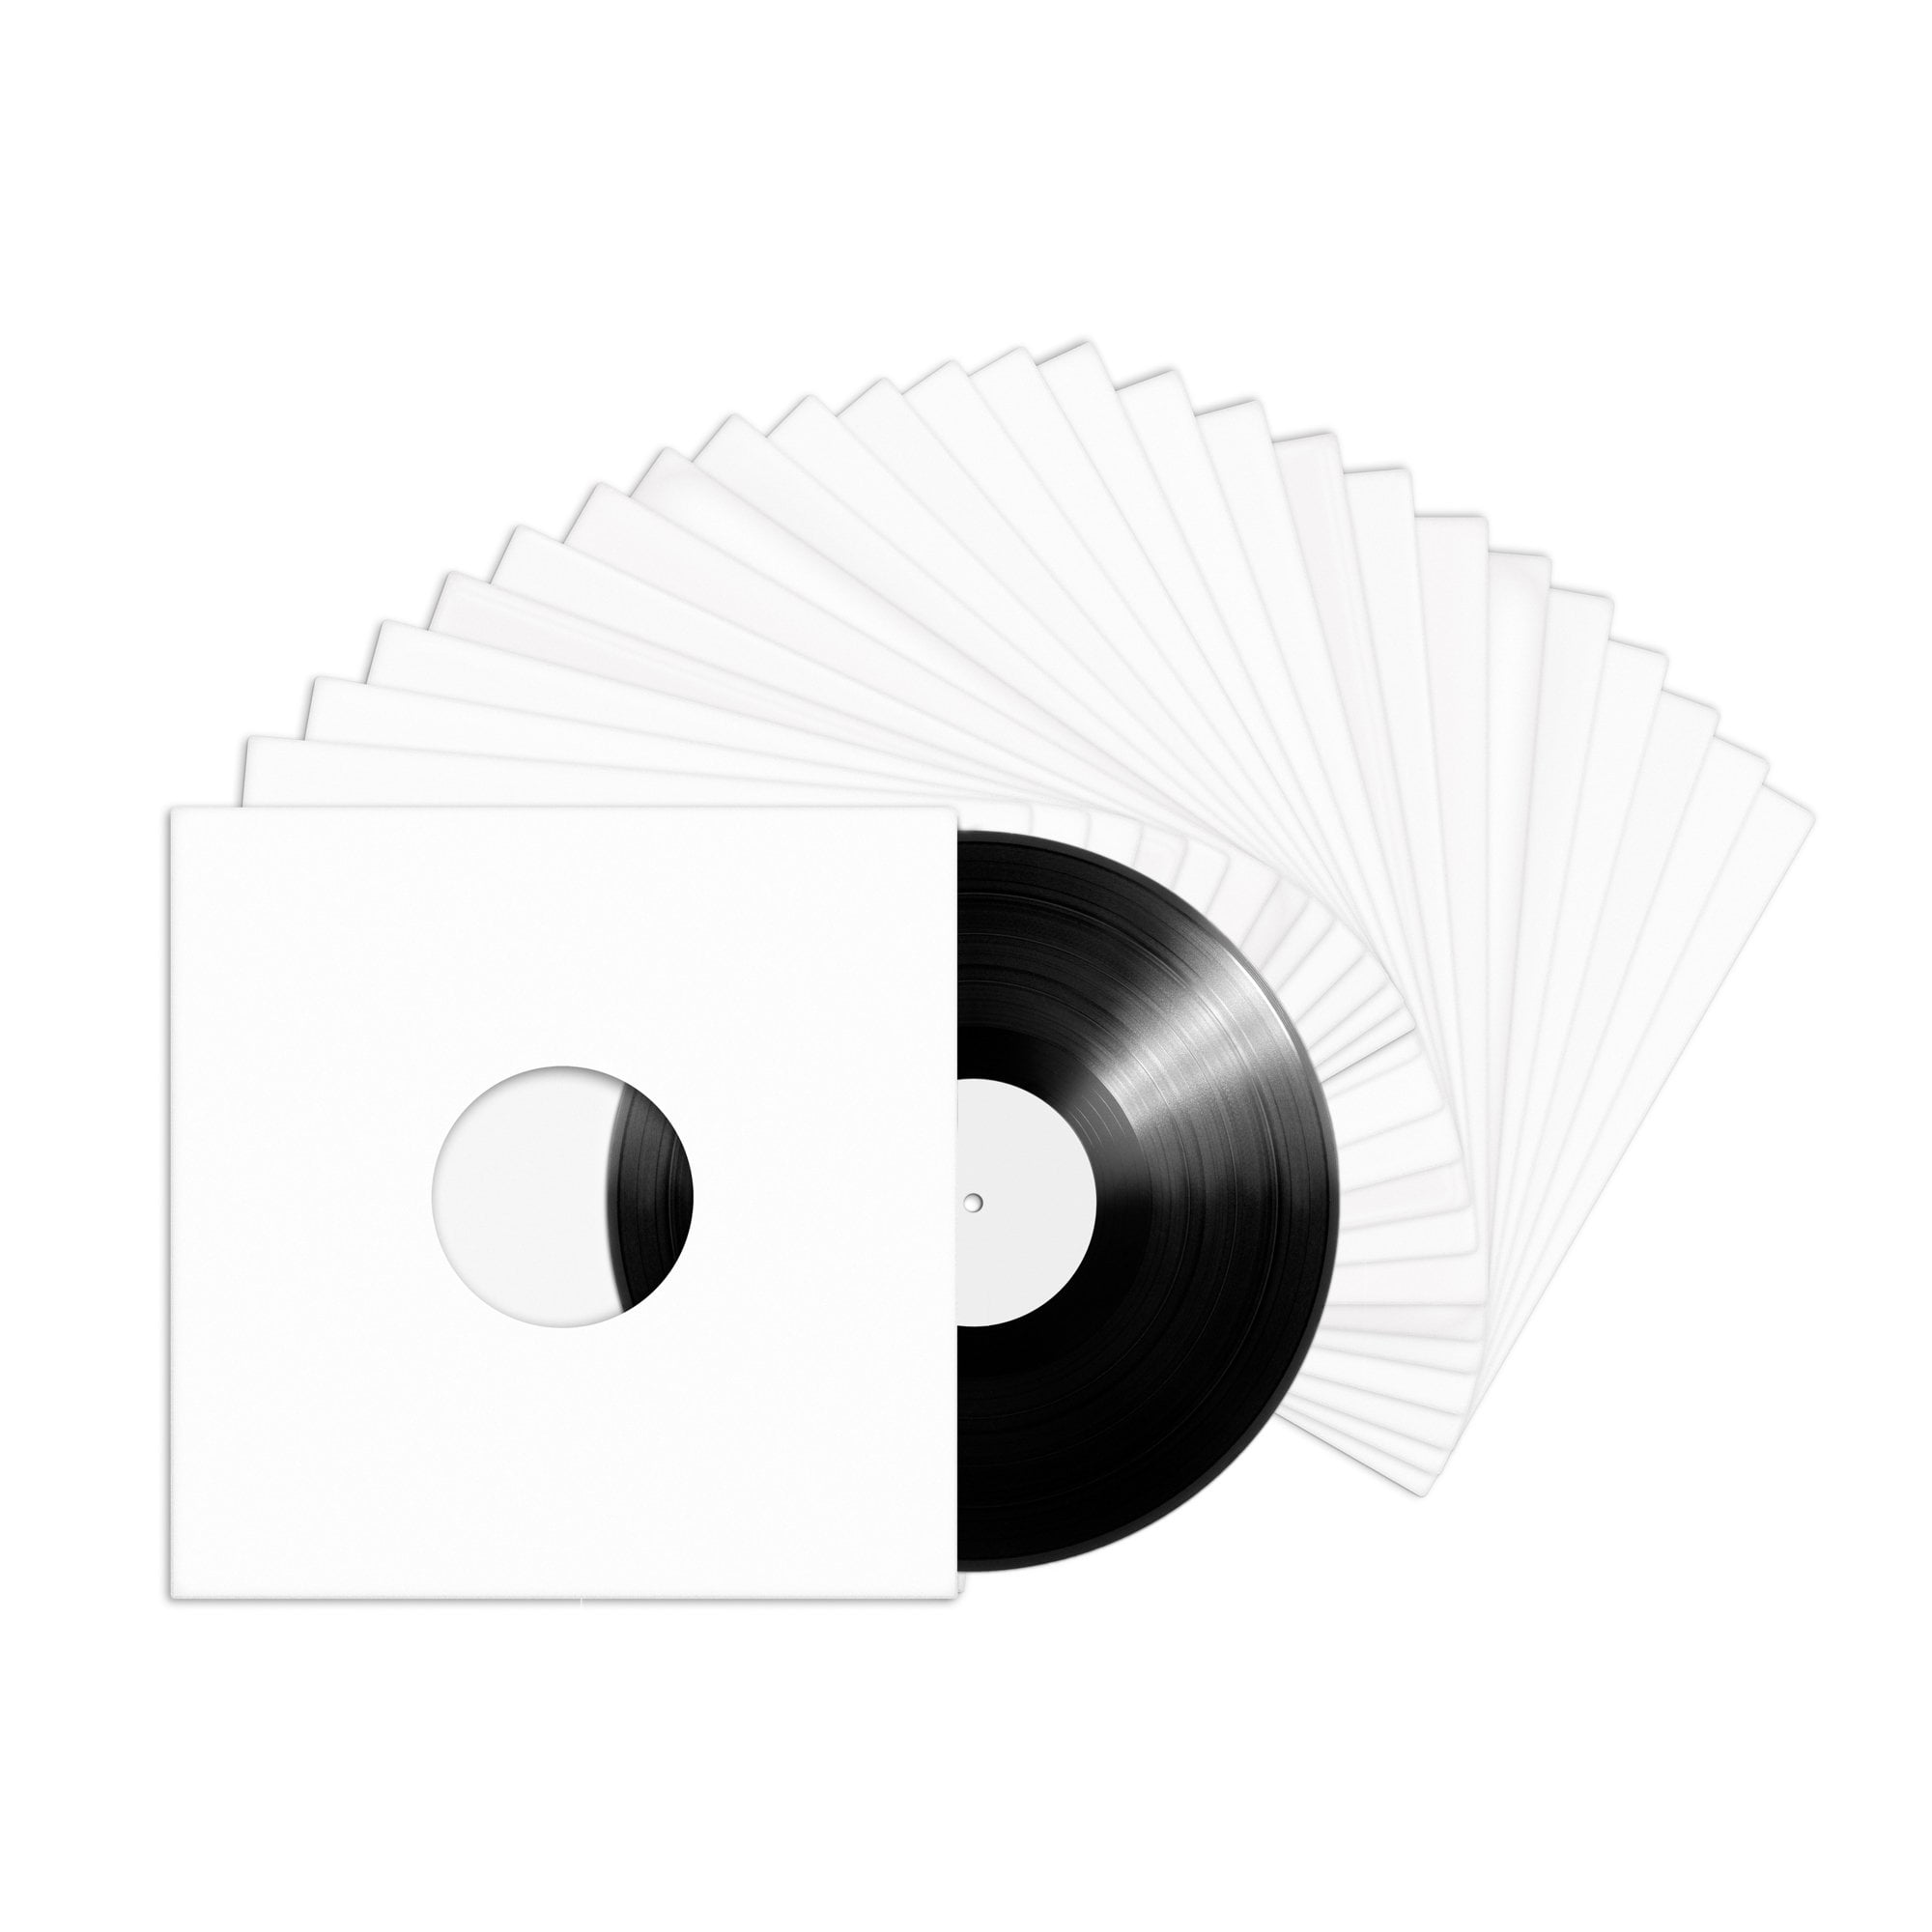 Tunephonik 12 inch LP Vinyl Record Jackets - White Coated w/ Center Hole 25 Pk